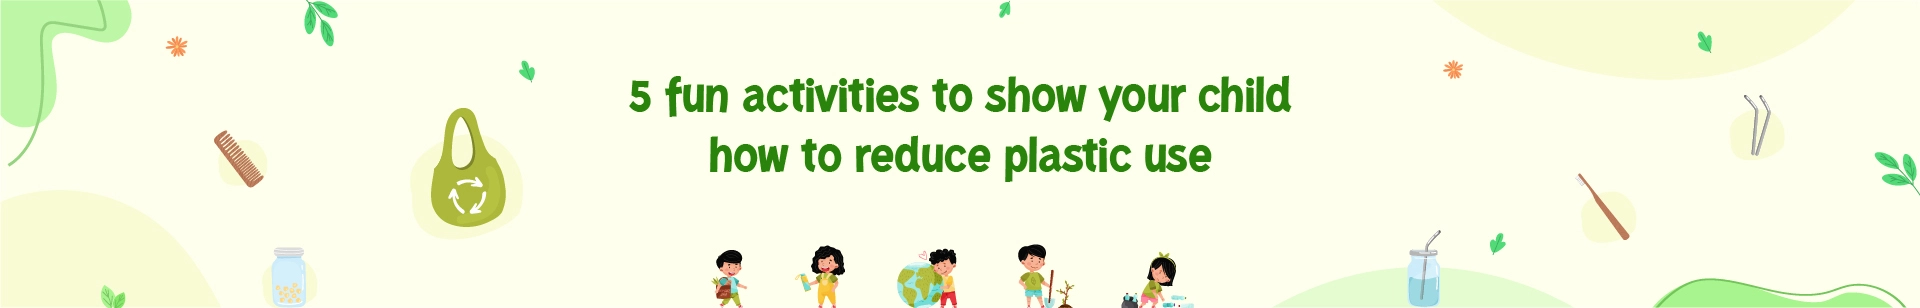 Ways to reduce plastic use